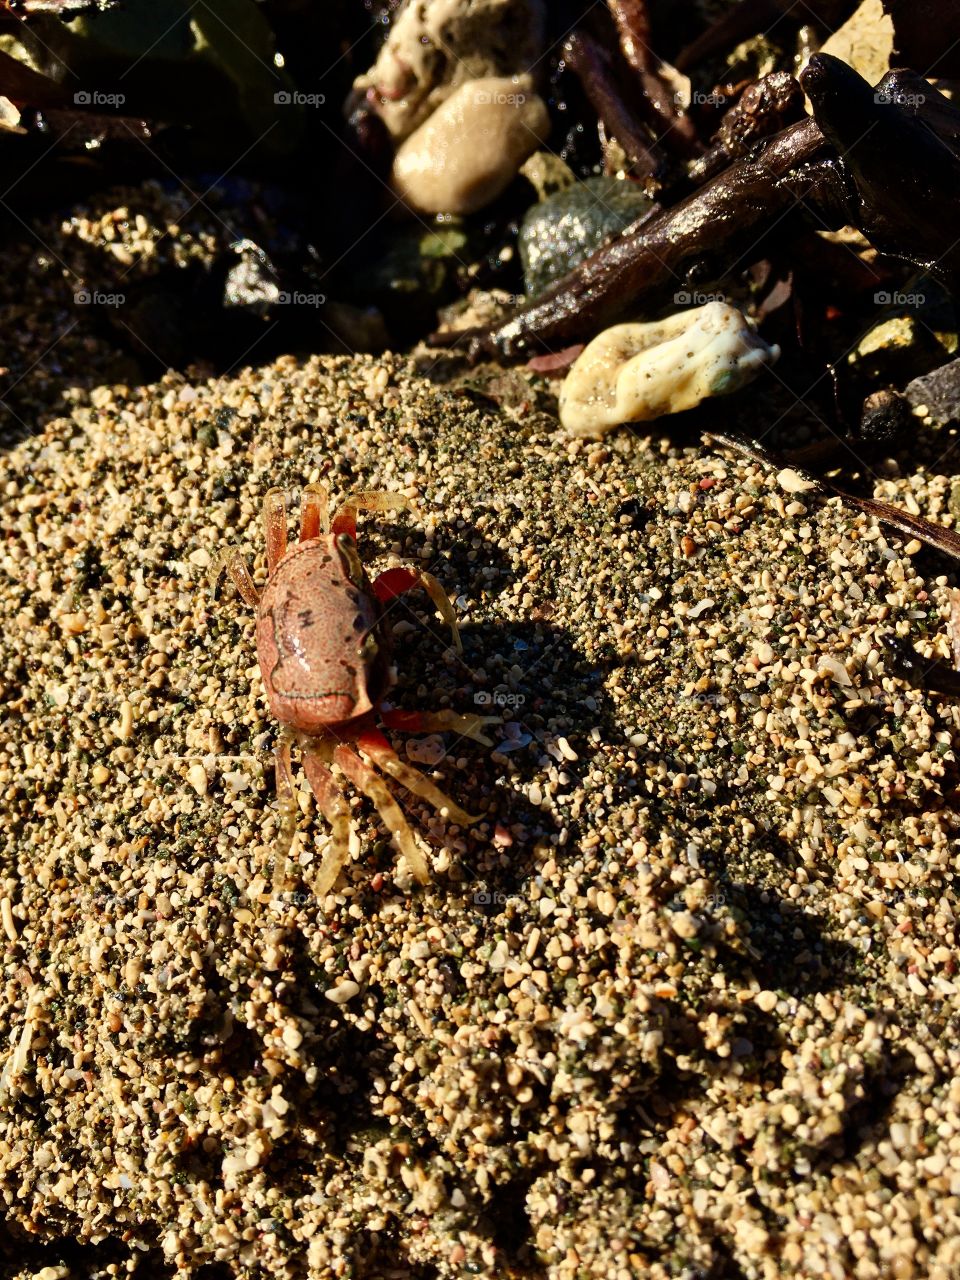 Crab shell 